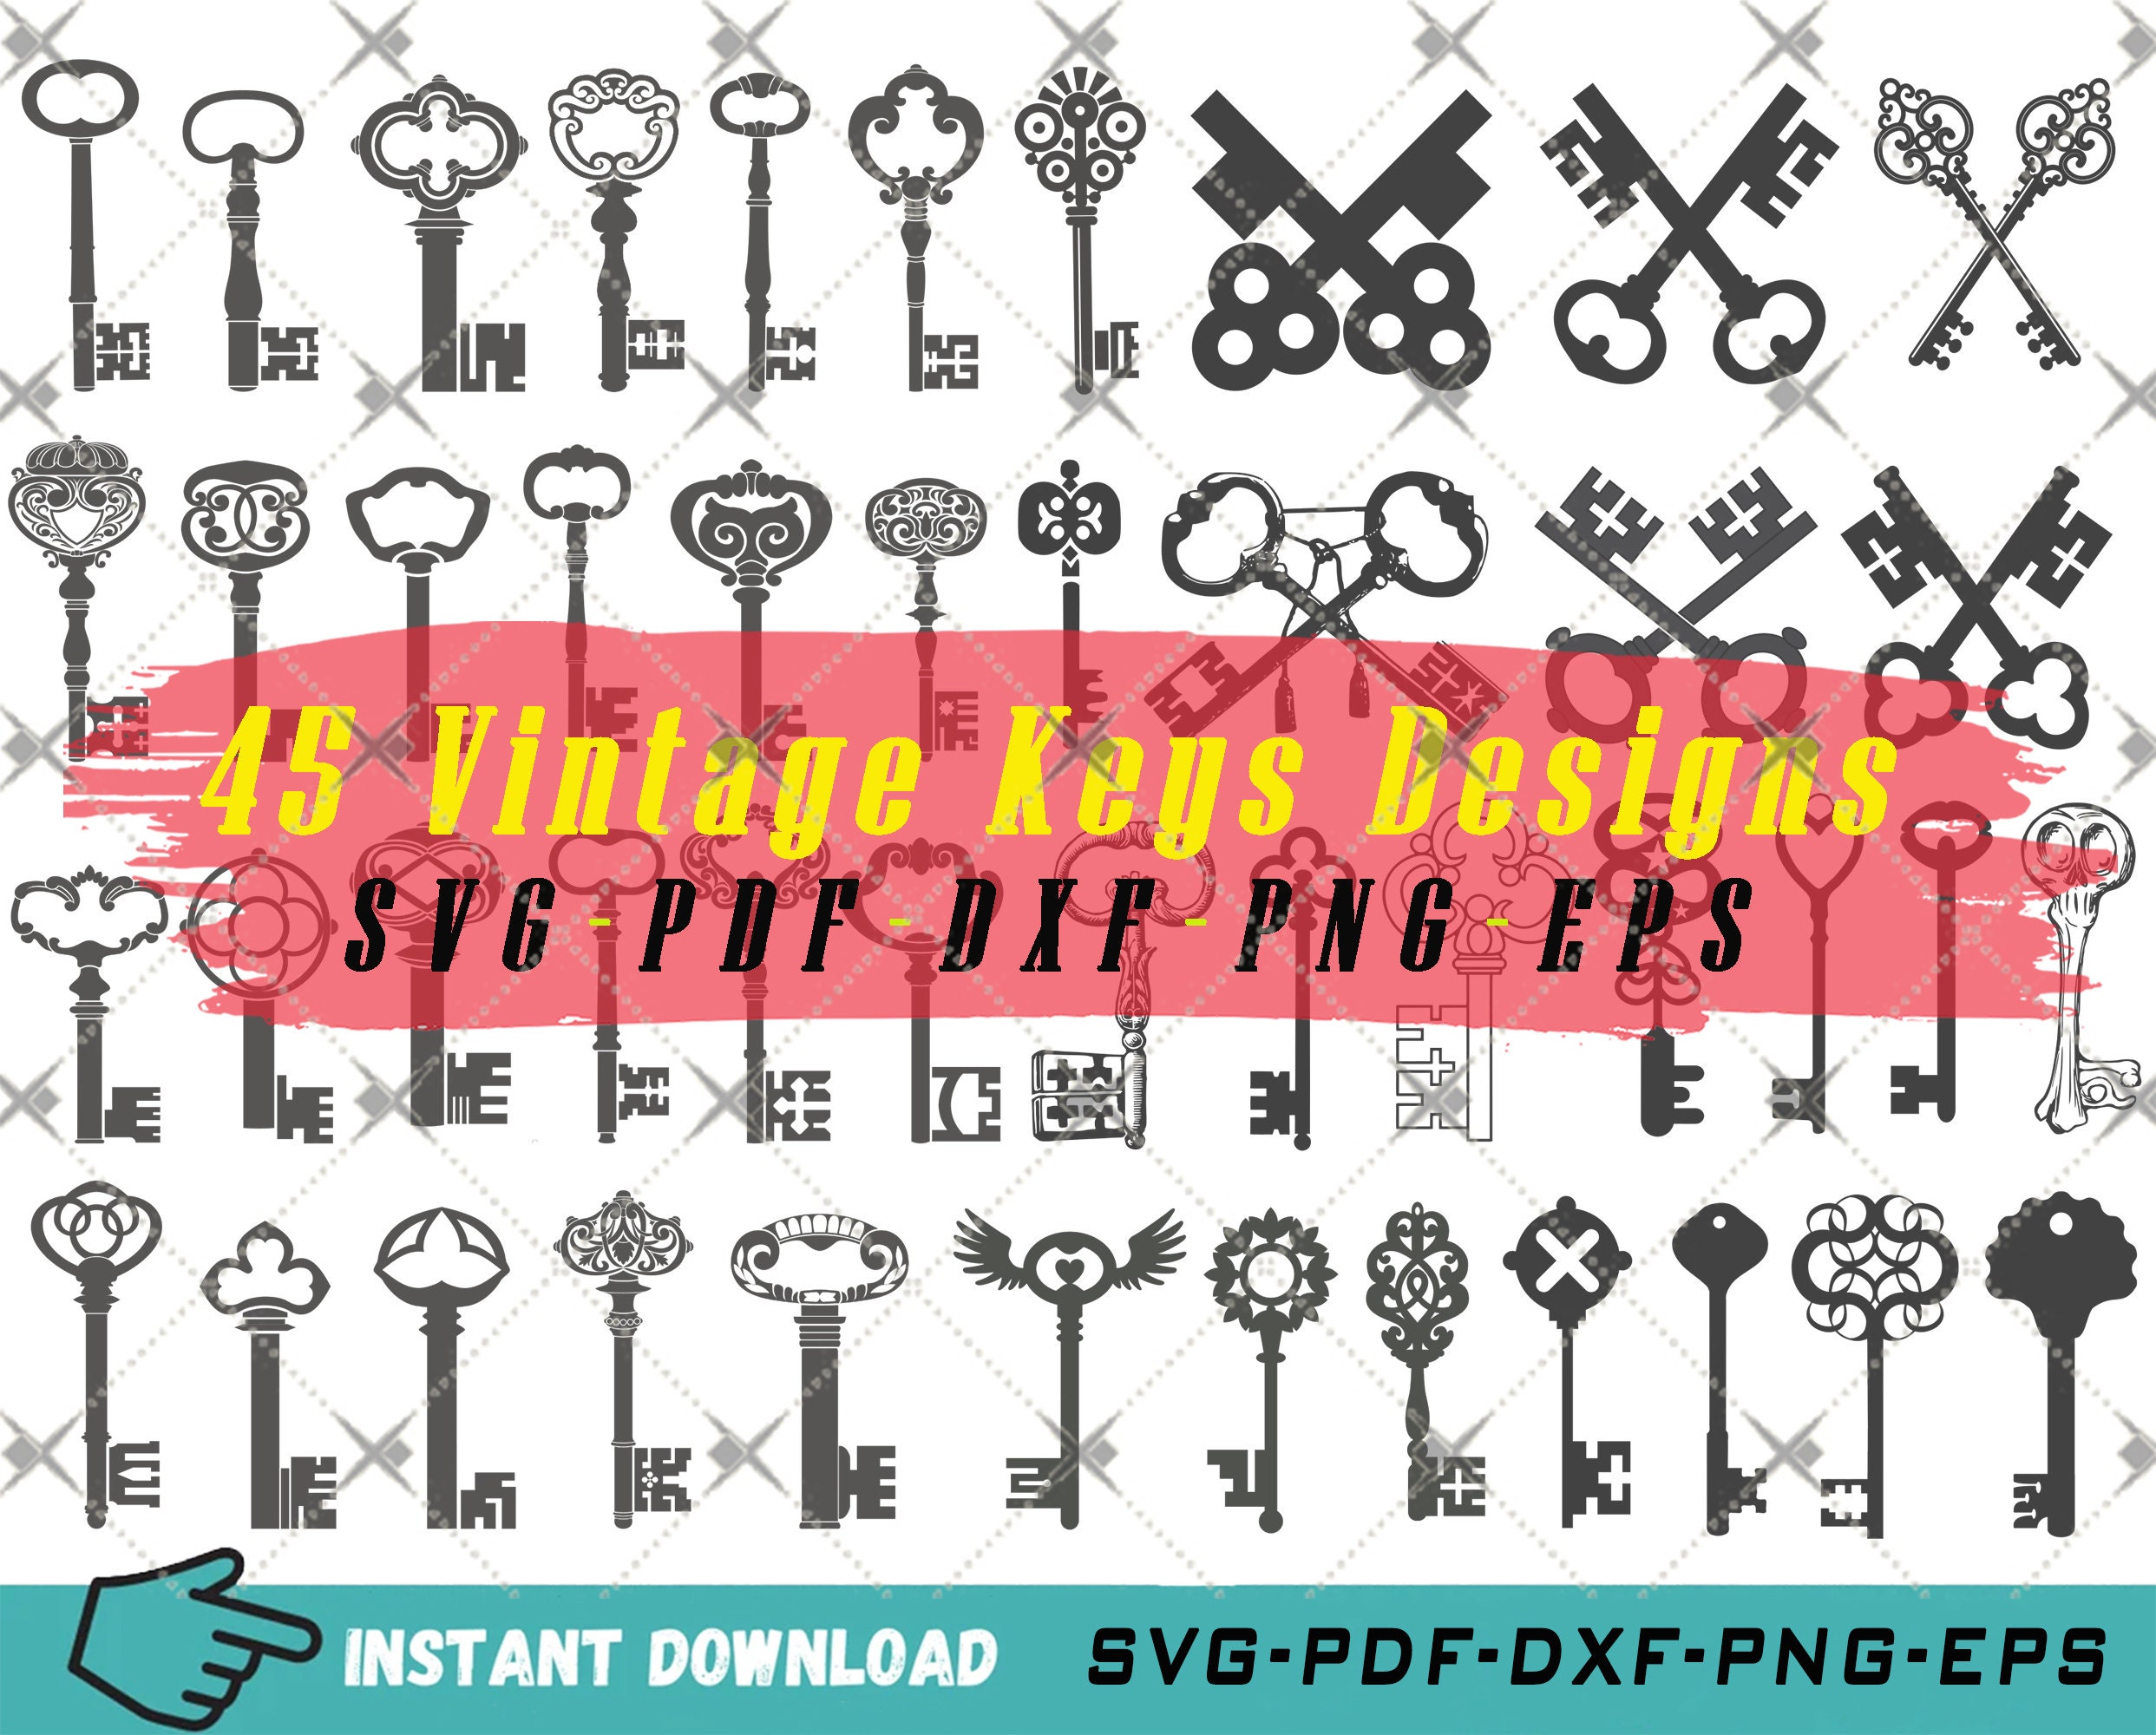 Vintage Keys SVG, Keys Silhouette, Lock Key Svg, Auto Keys Svg, Antique  Keys Svg, Keys Bundle - Crella